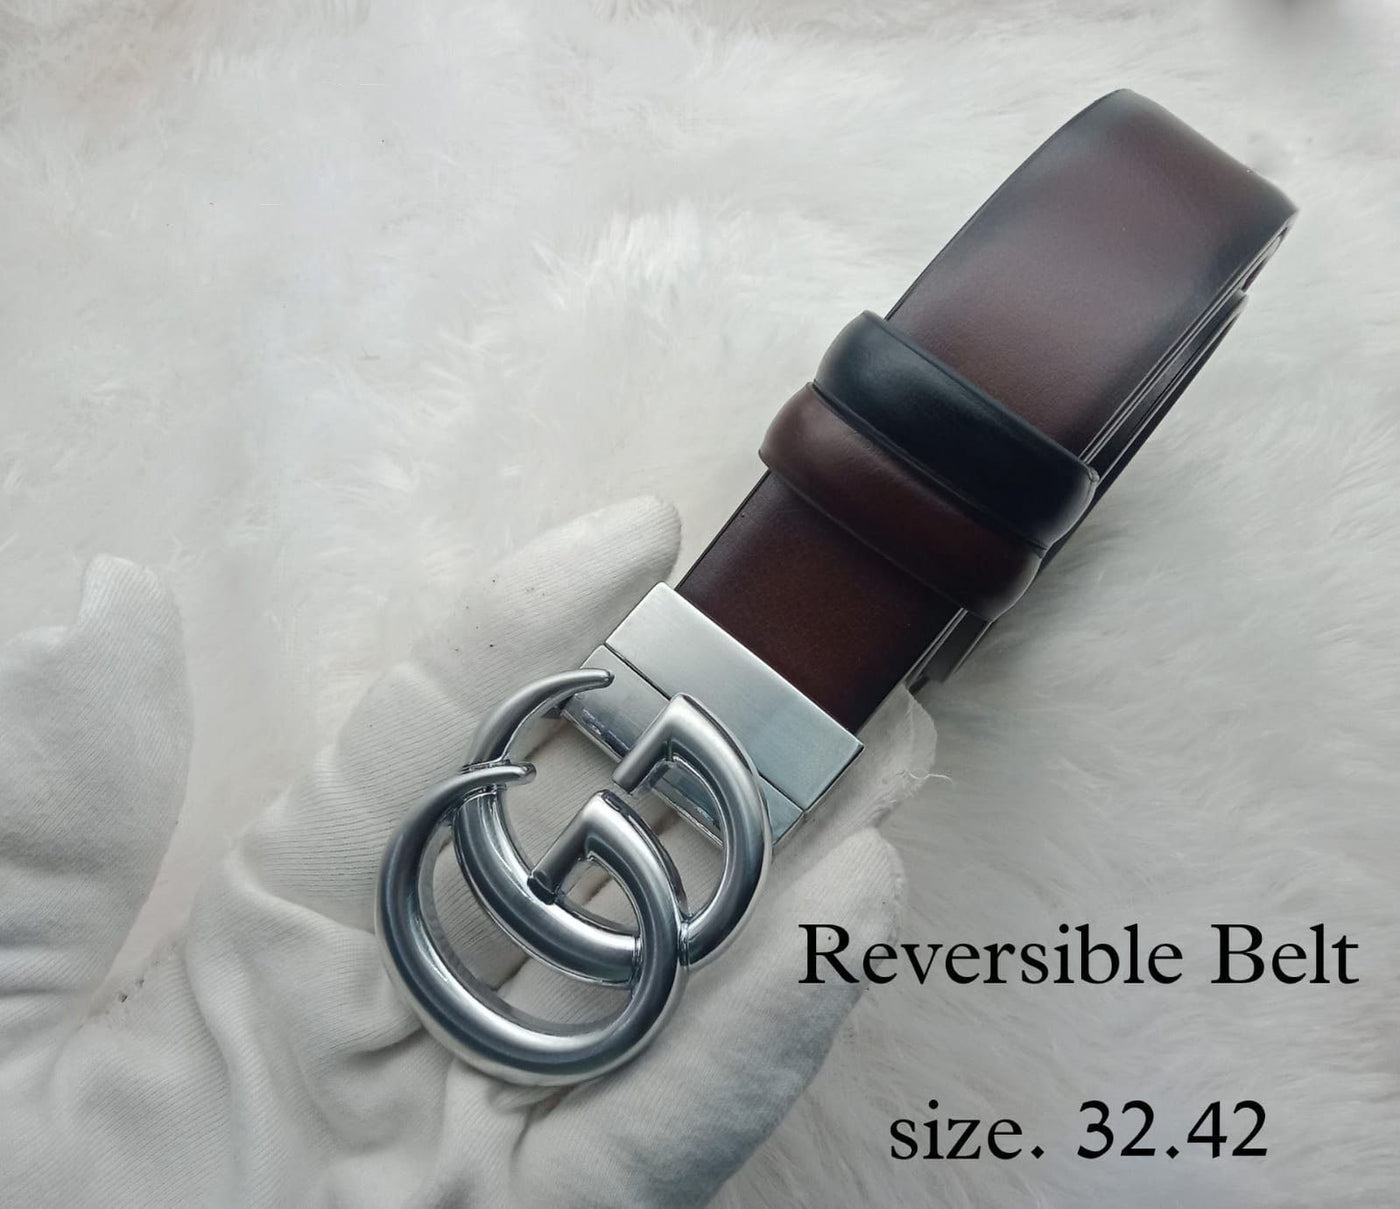 G Letter Designer Buckle Belt With Reversible Strap For Men's-Unique and Classy